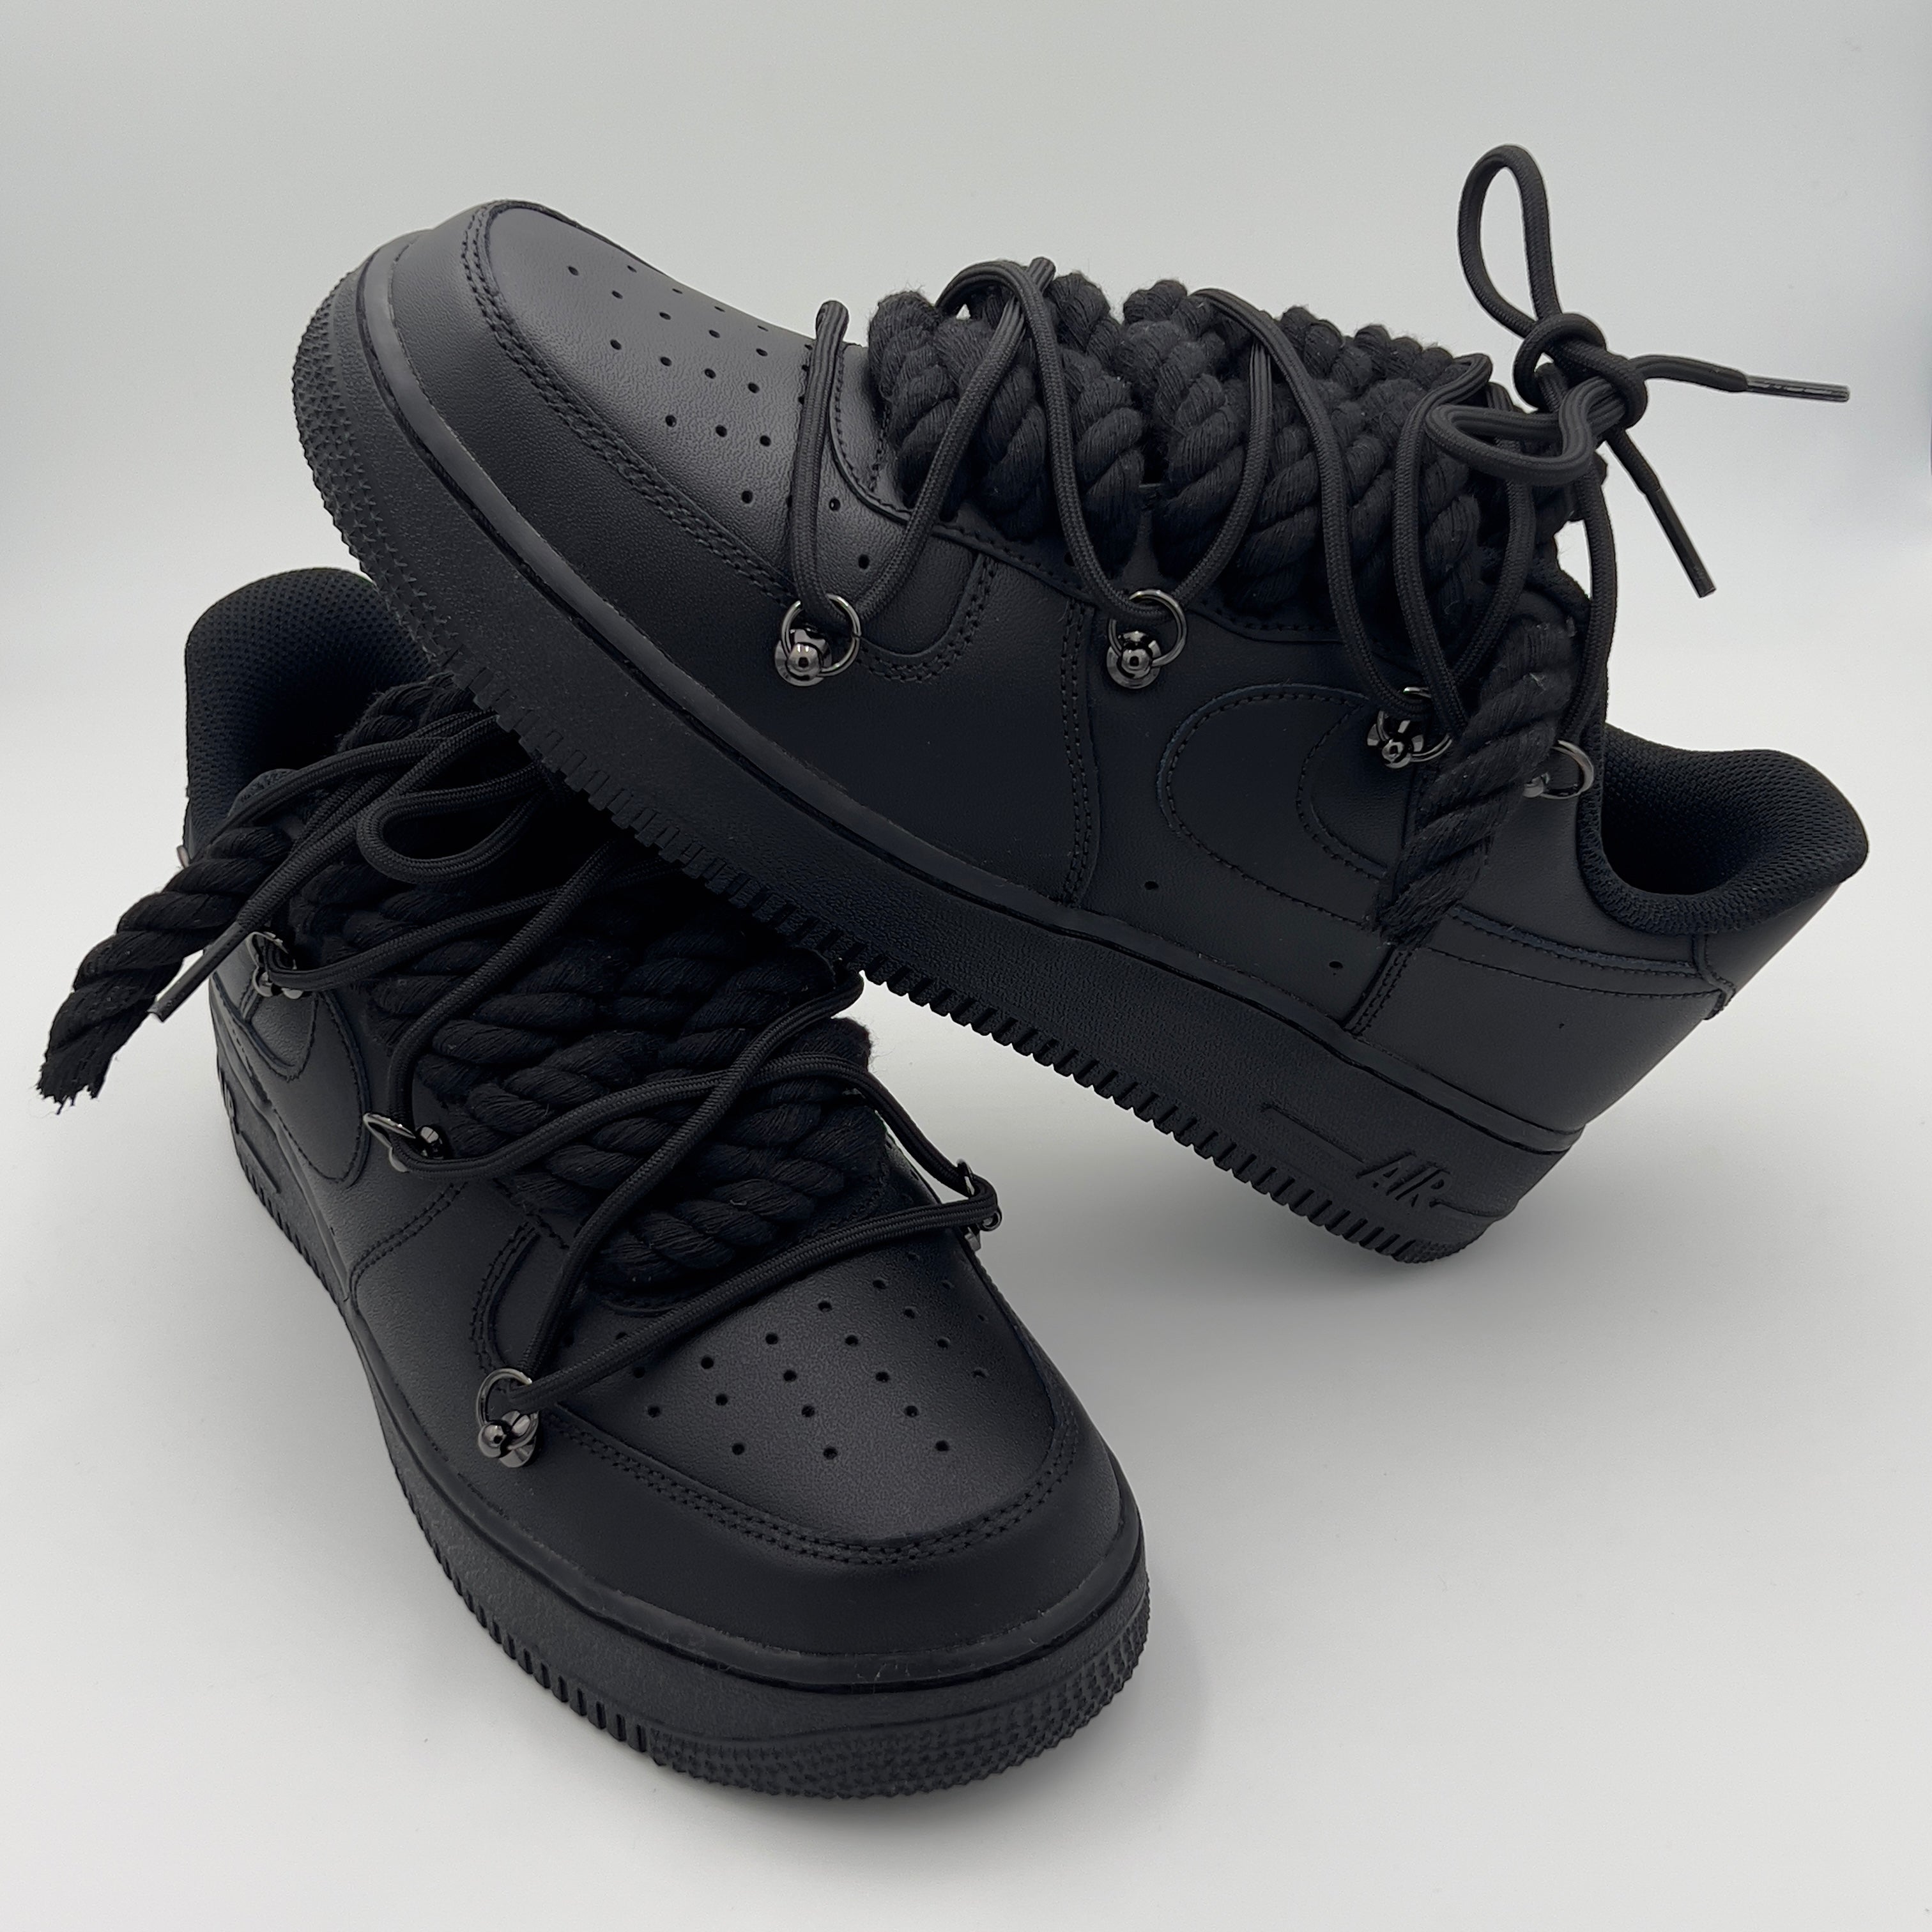 Nike Air Force 1 “Rope Laces White” Triple Black – EV8 Style